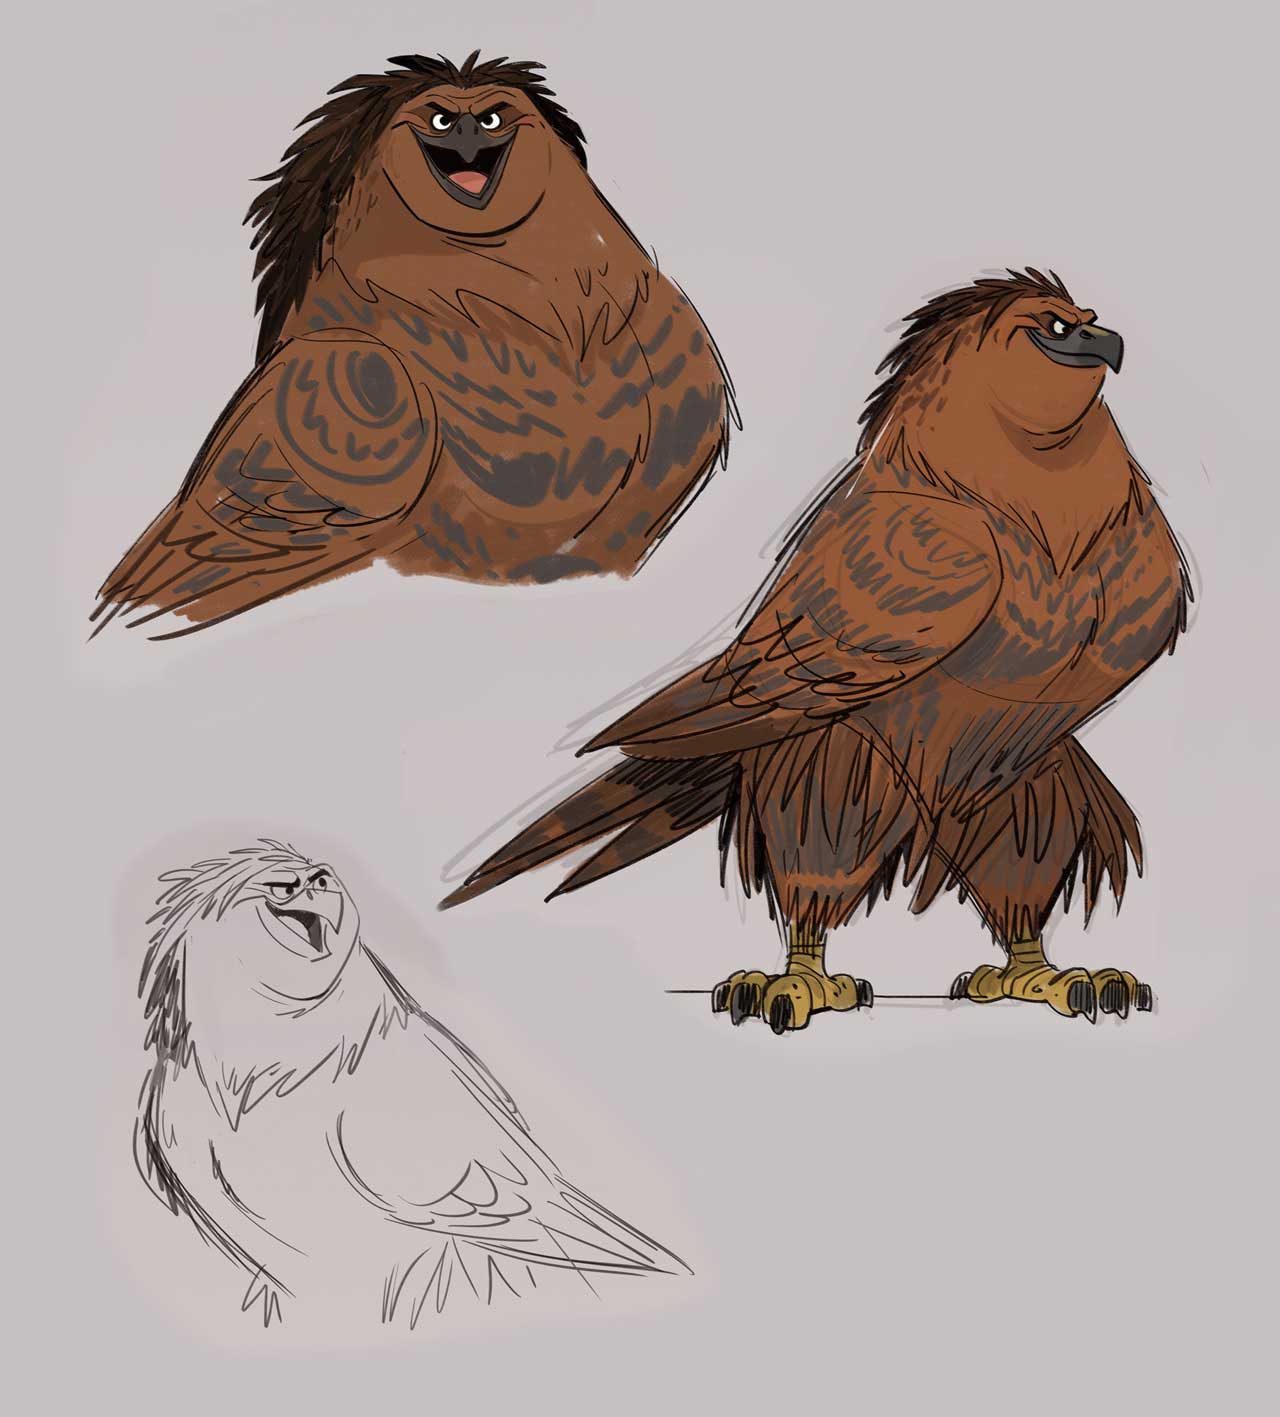 MAUI Hawk visual development. Artist: Bill Schwab, MOANA Art Director, Characters